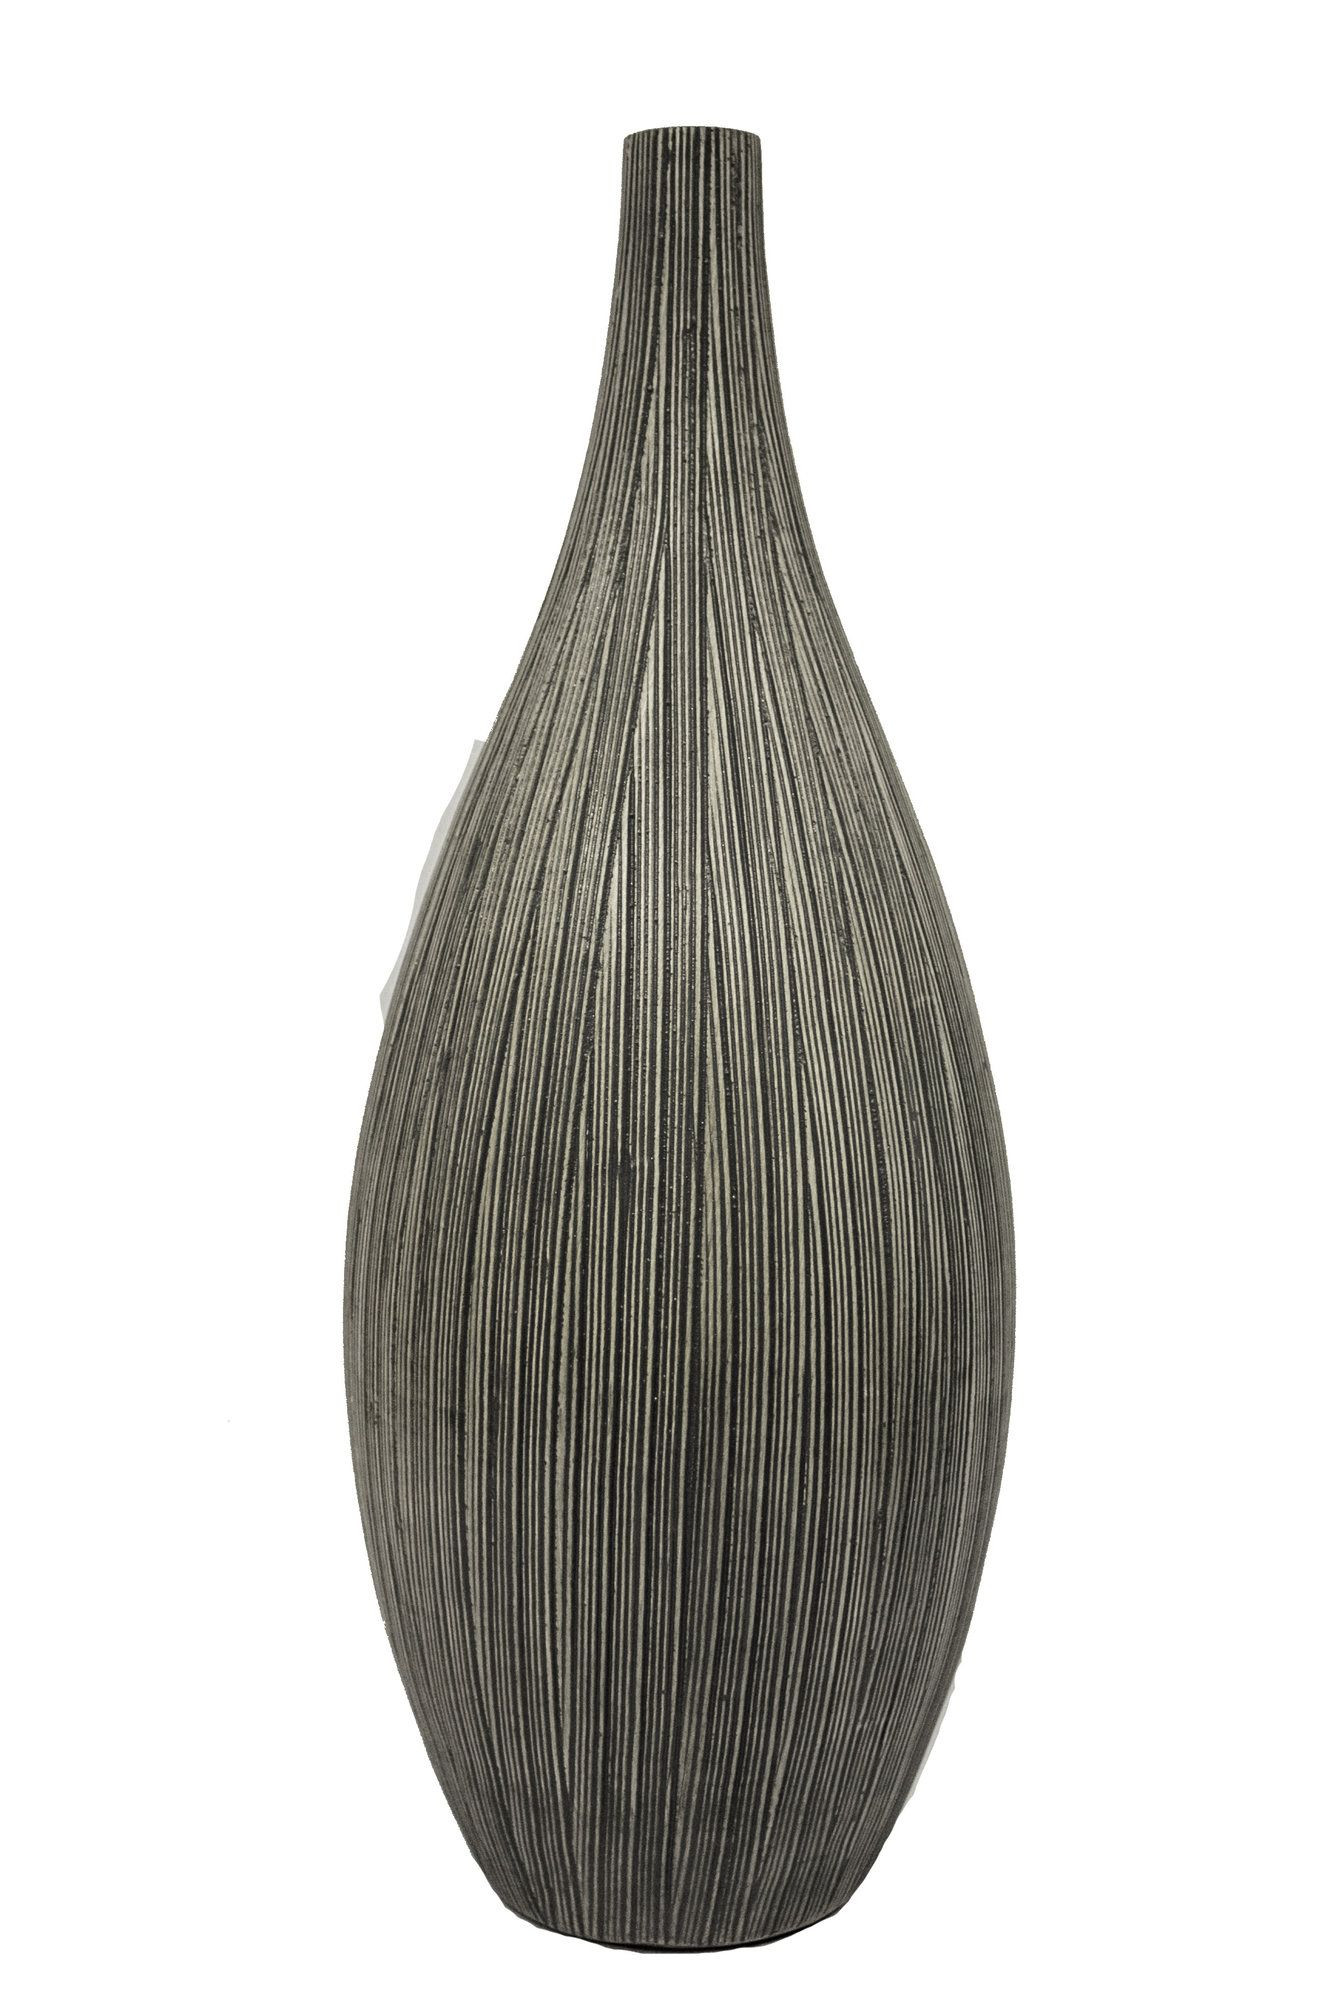 polyresin vase of sagebrook home pitted bottle table vase vc10018 01 for emmett bottle floor vase